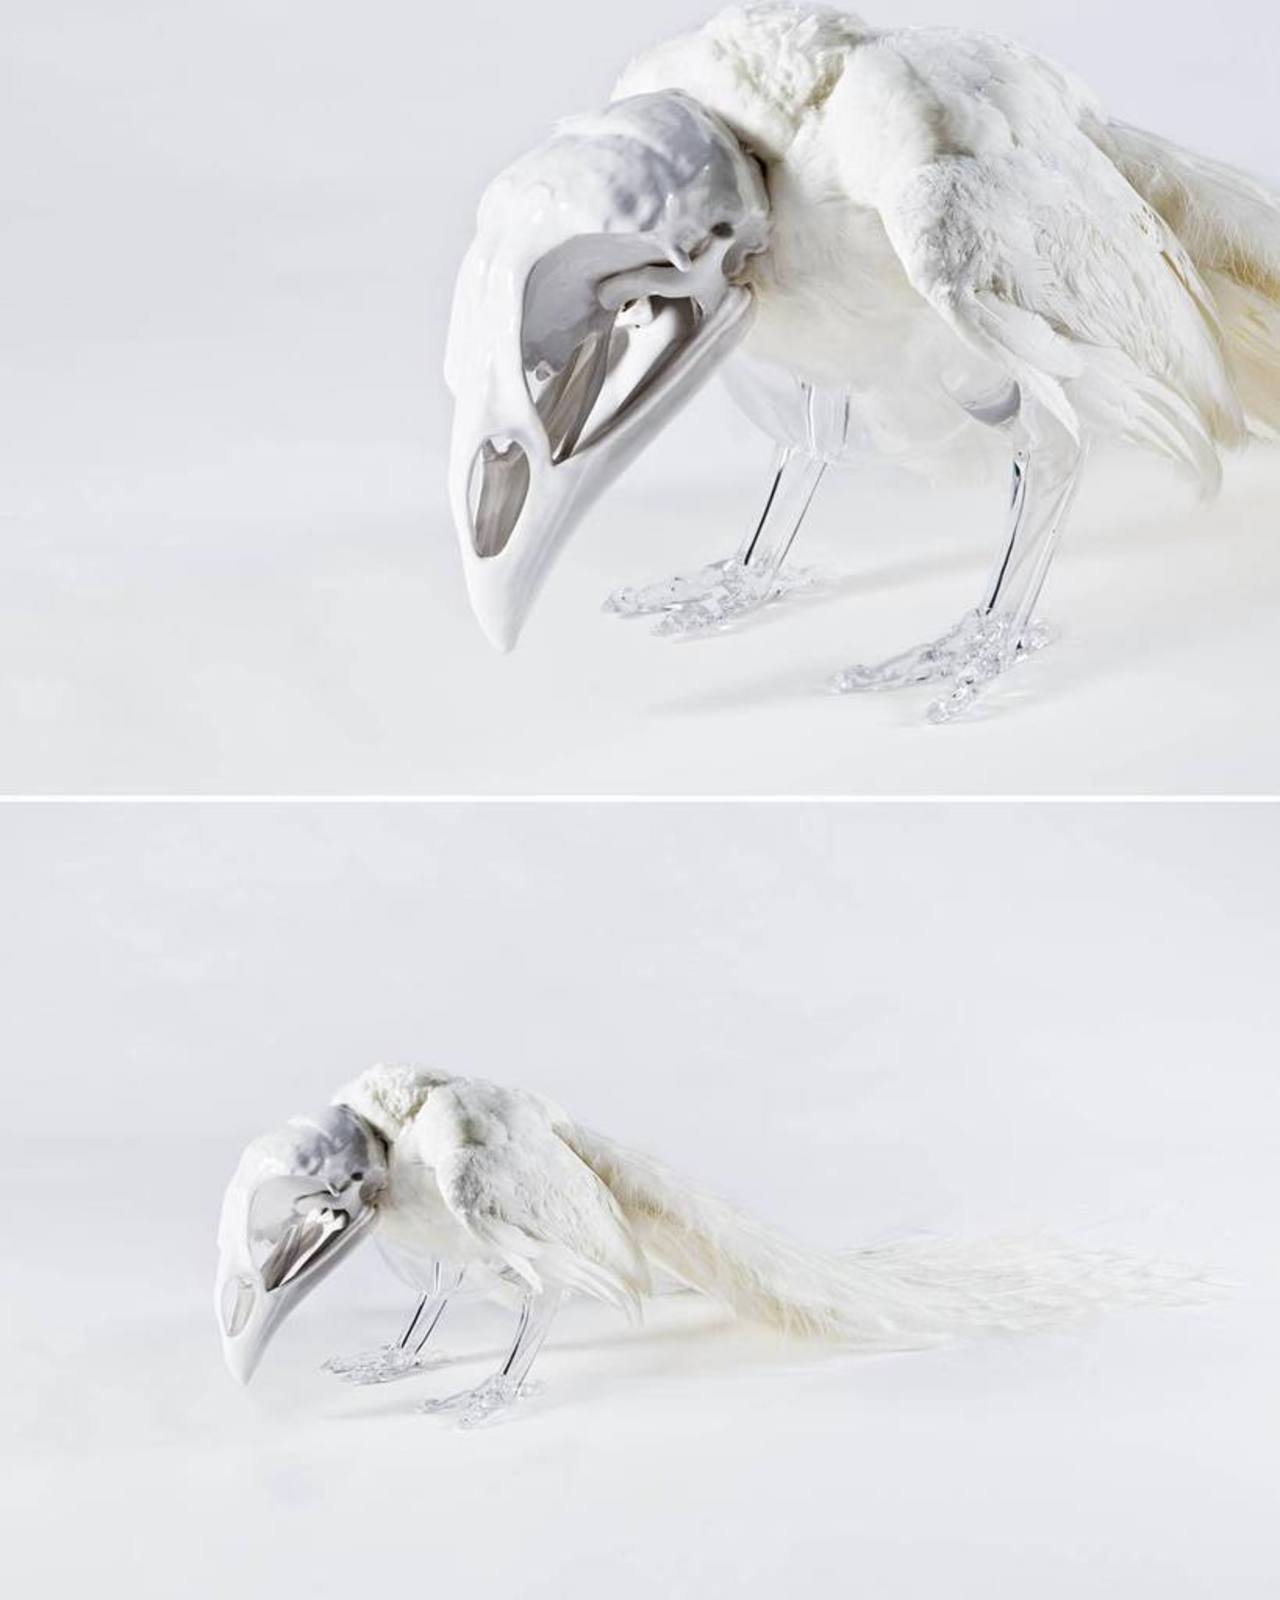 White #peacock #art #artificialCrossbreeding #glass #ceramics #taxidermy http://ift.tt/1Ks5iuW http://t.co/60zTGBYglz